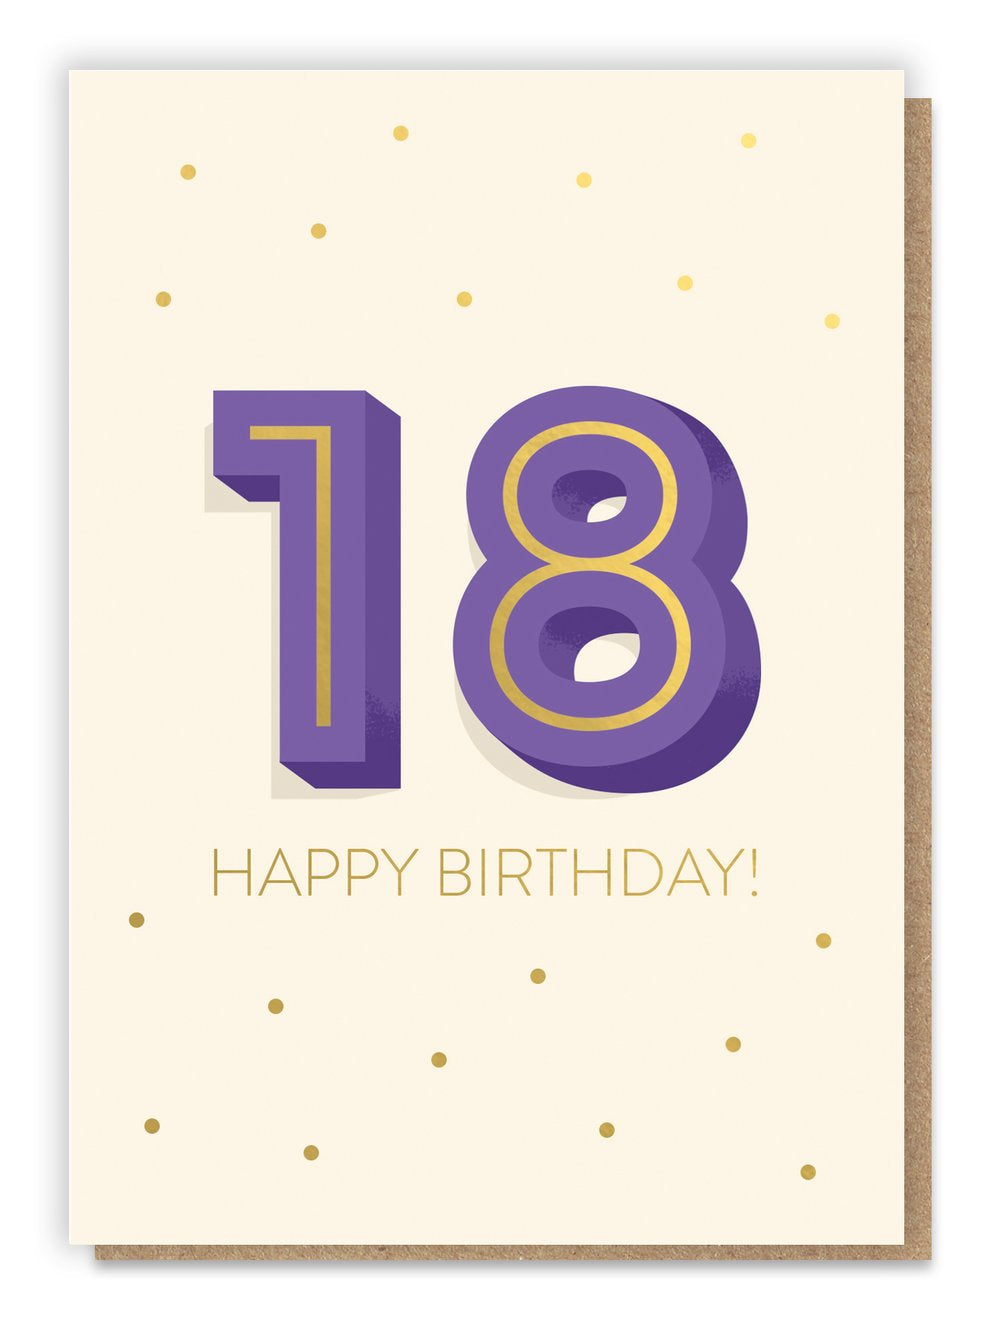 Big 1-8 Birthday Card - Age 18